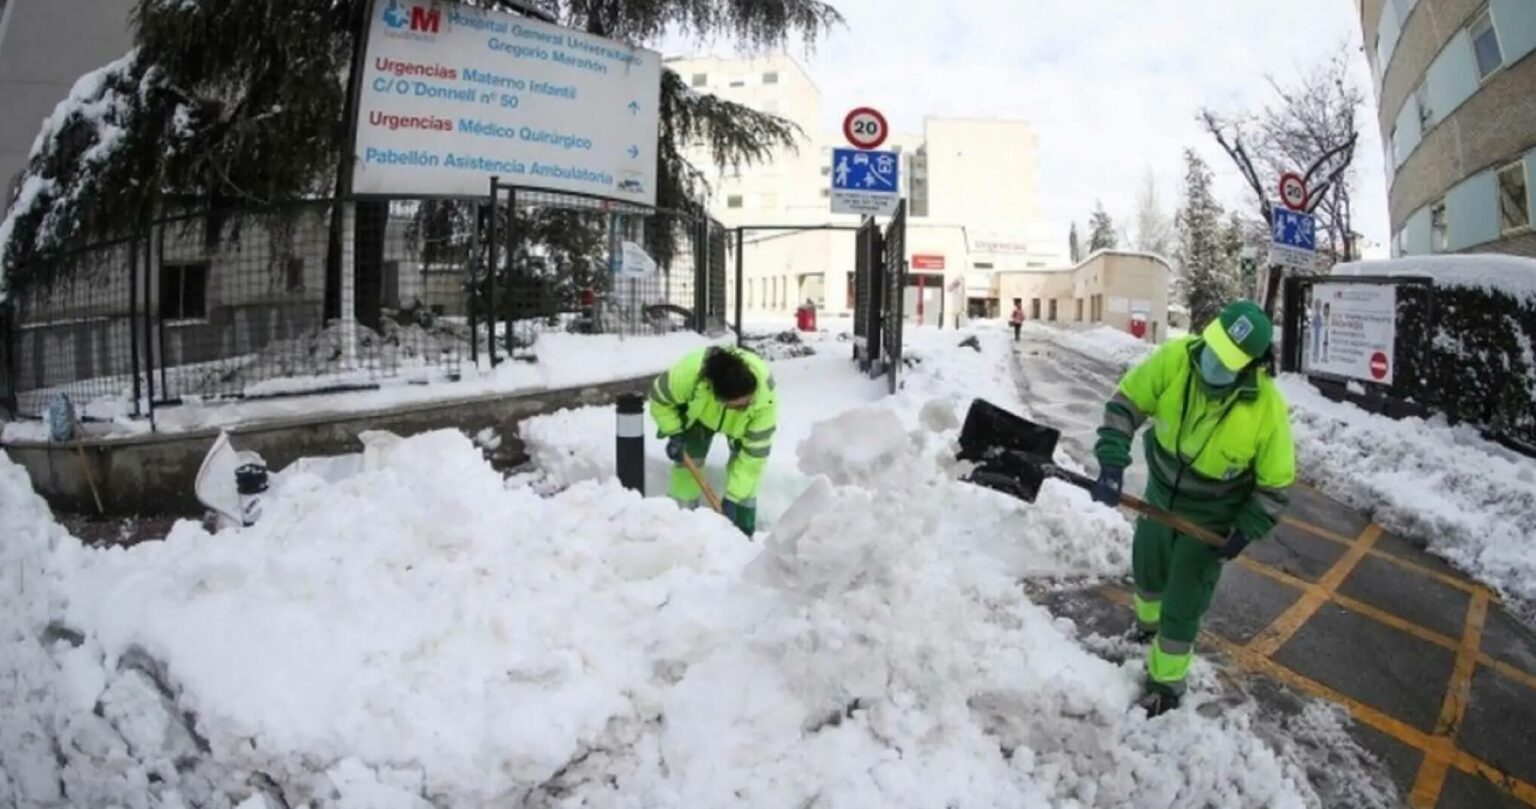 Madrid Snow Storm 2021 1536x809 